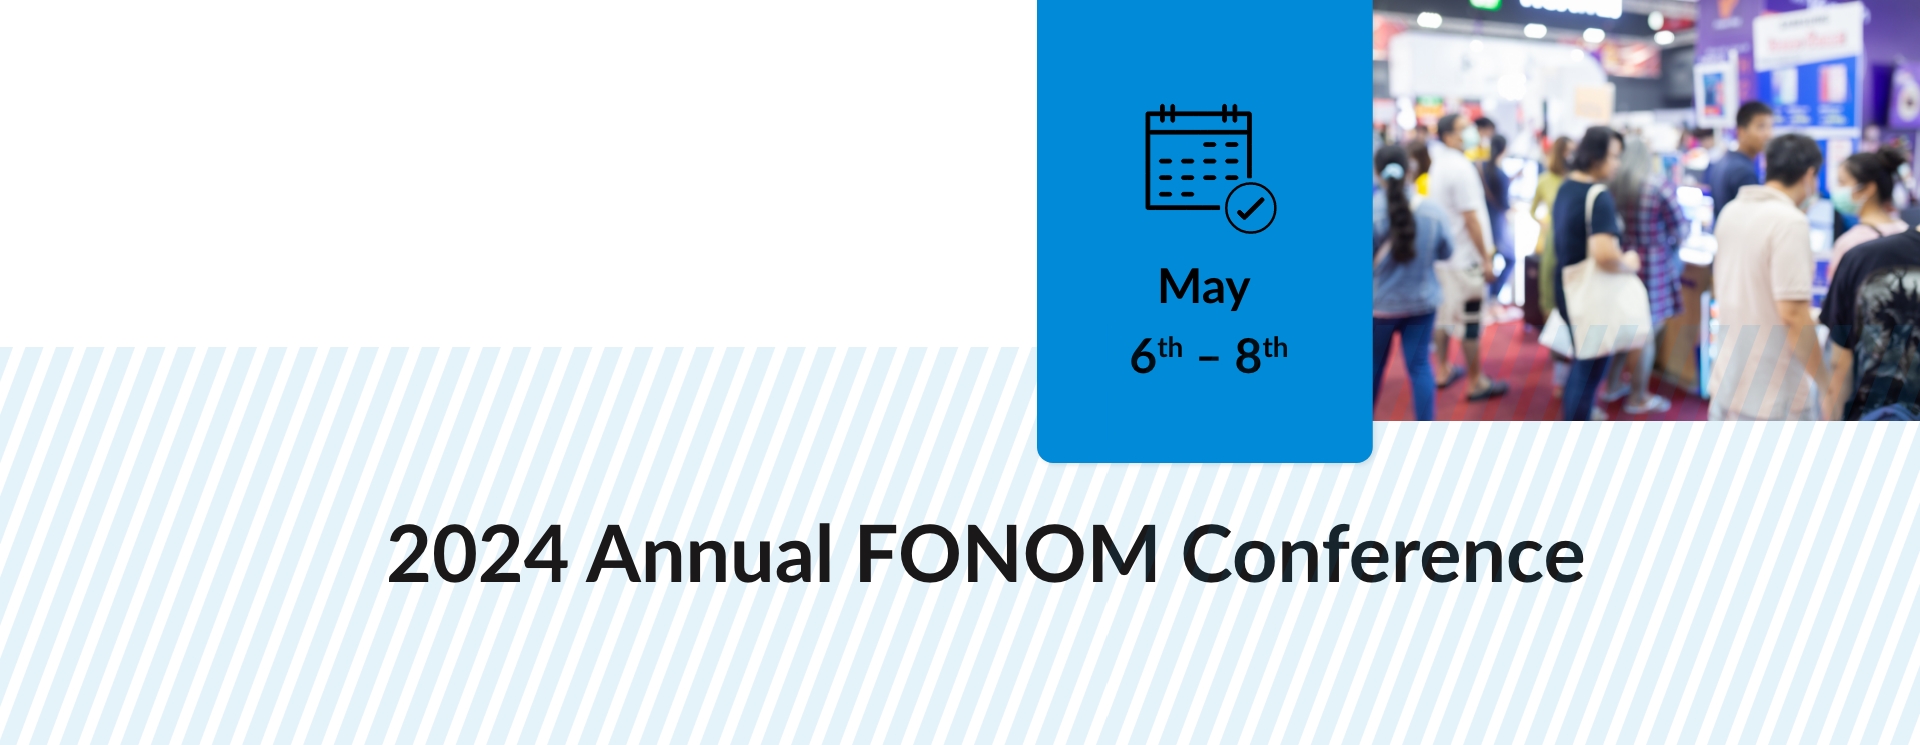 2024 FONOM Conference